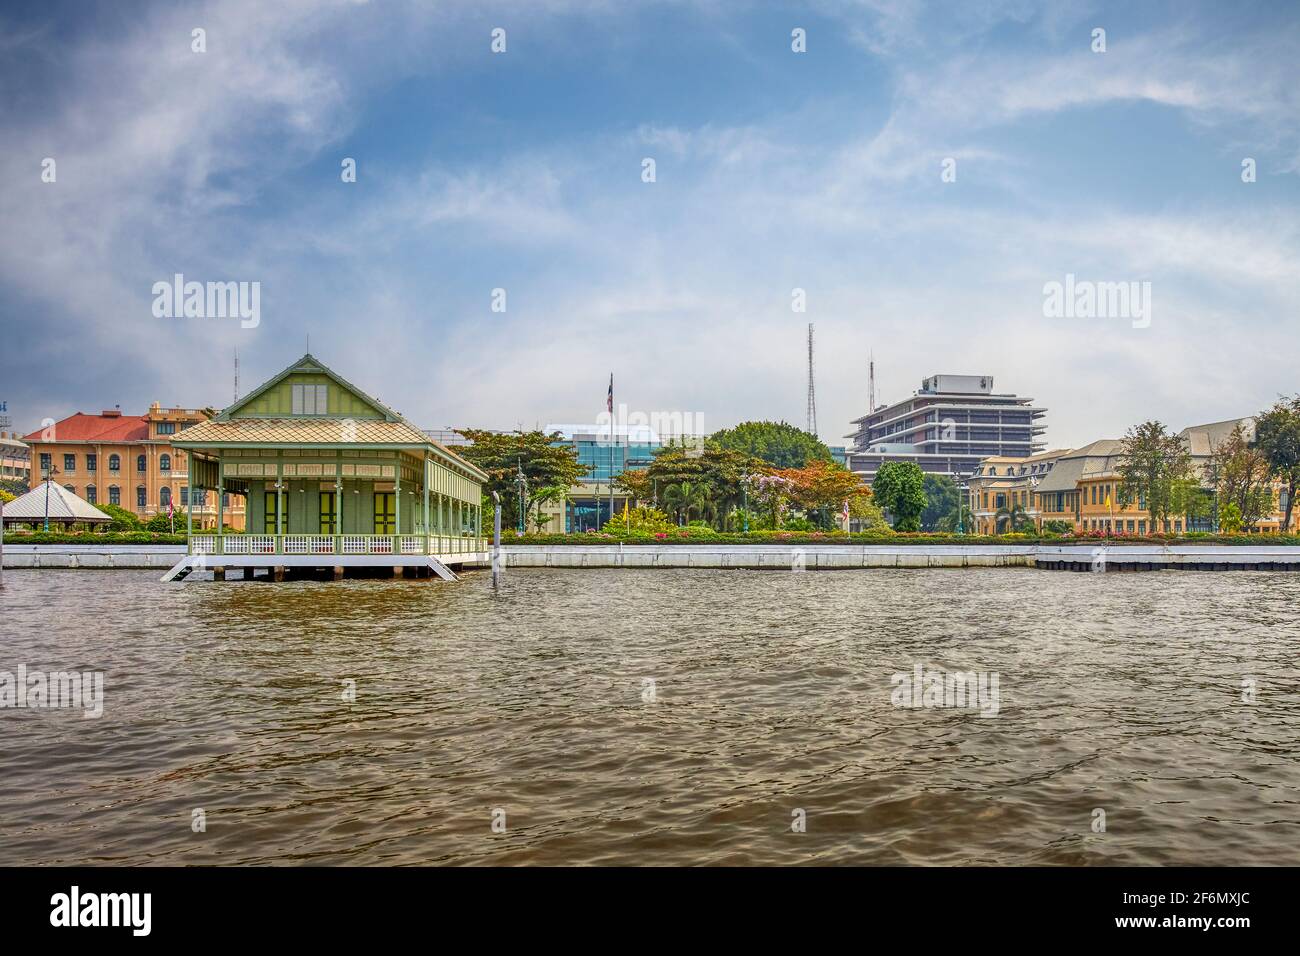 Devavesm Palace Museum พิพิธภัณฑ์วังเทวะเวศม์ bangkok, thailand Stock Photo